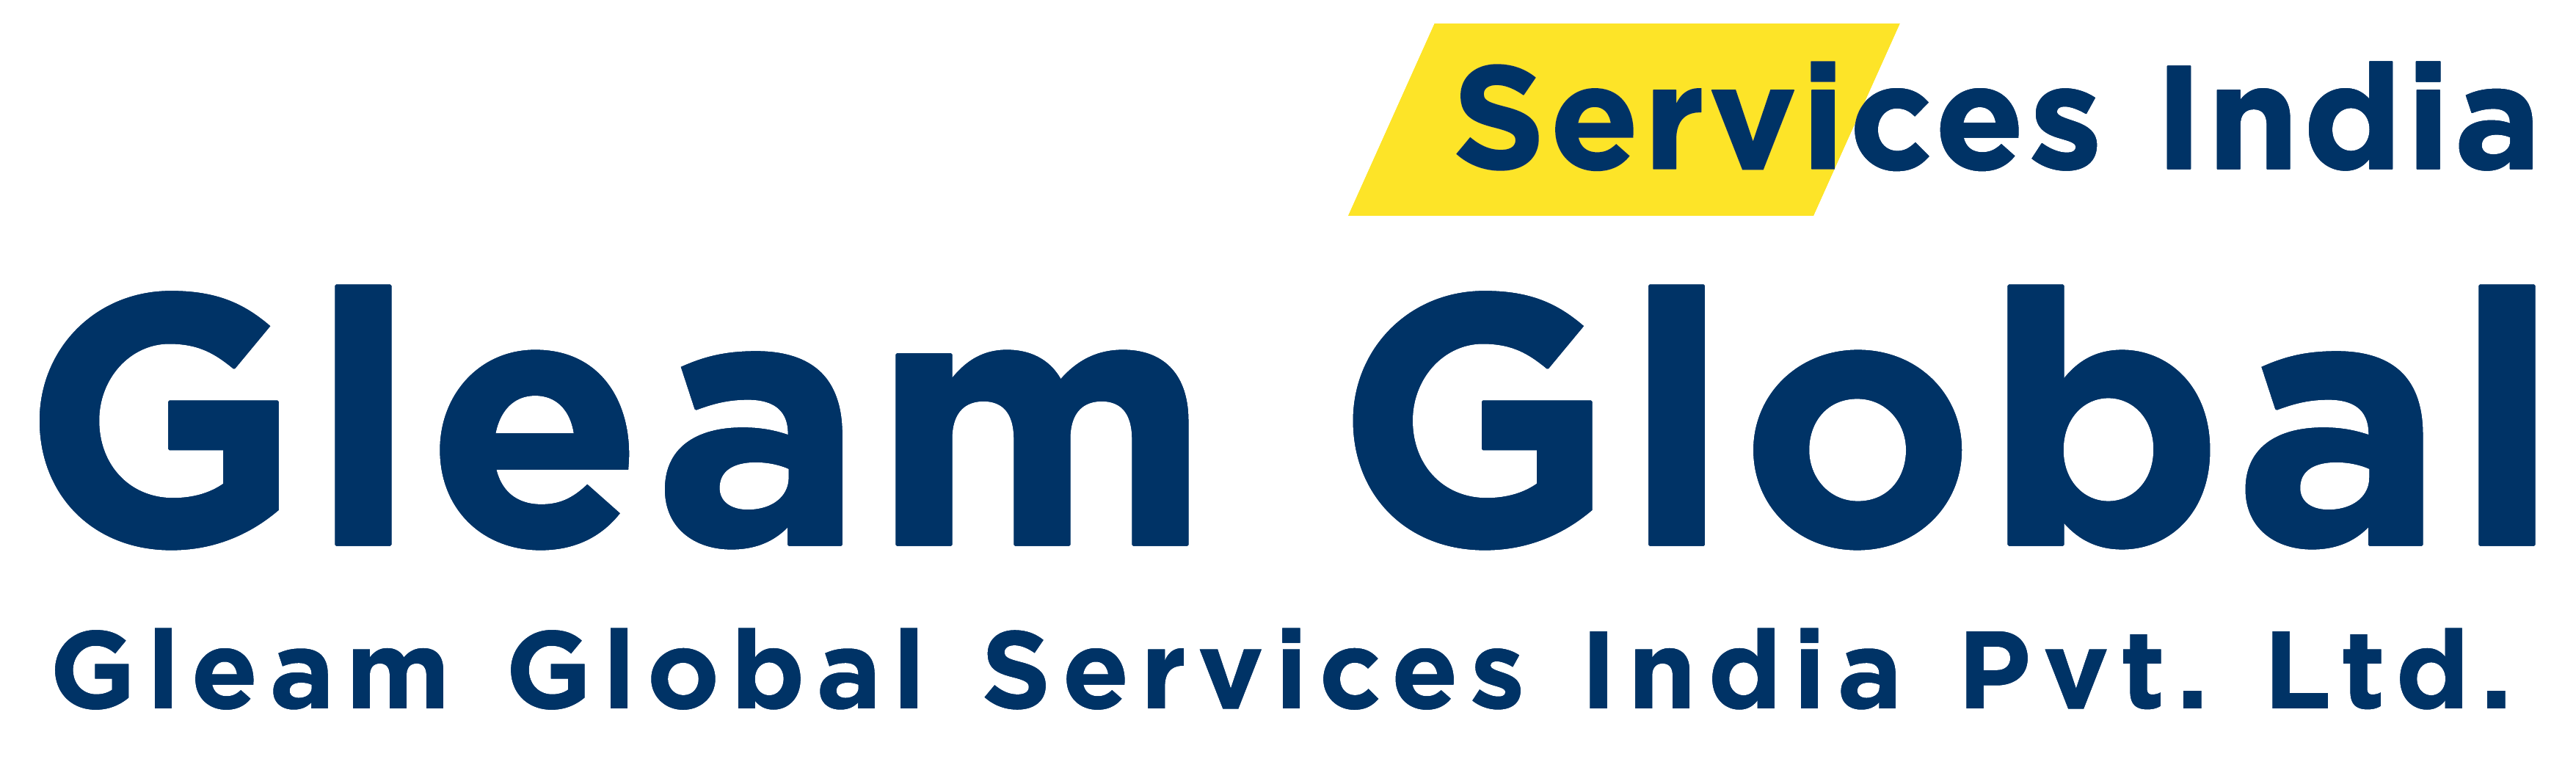 Gleam Global Services India Pvt Ltd